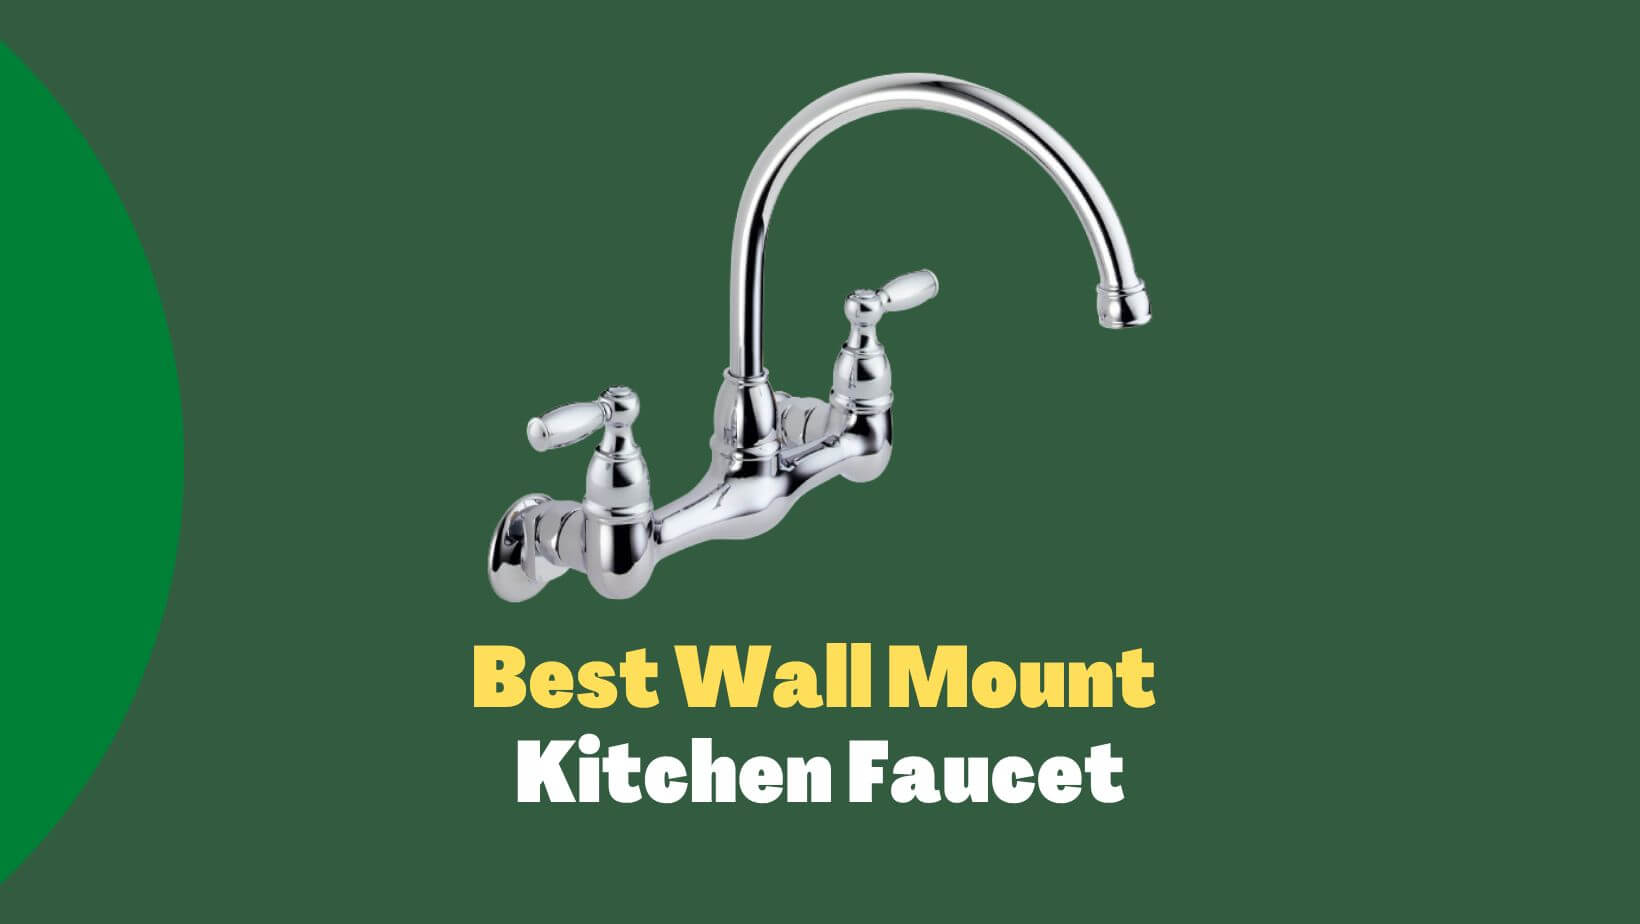 15 width wall mount kitchen faucet